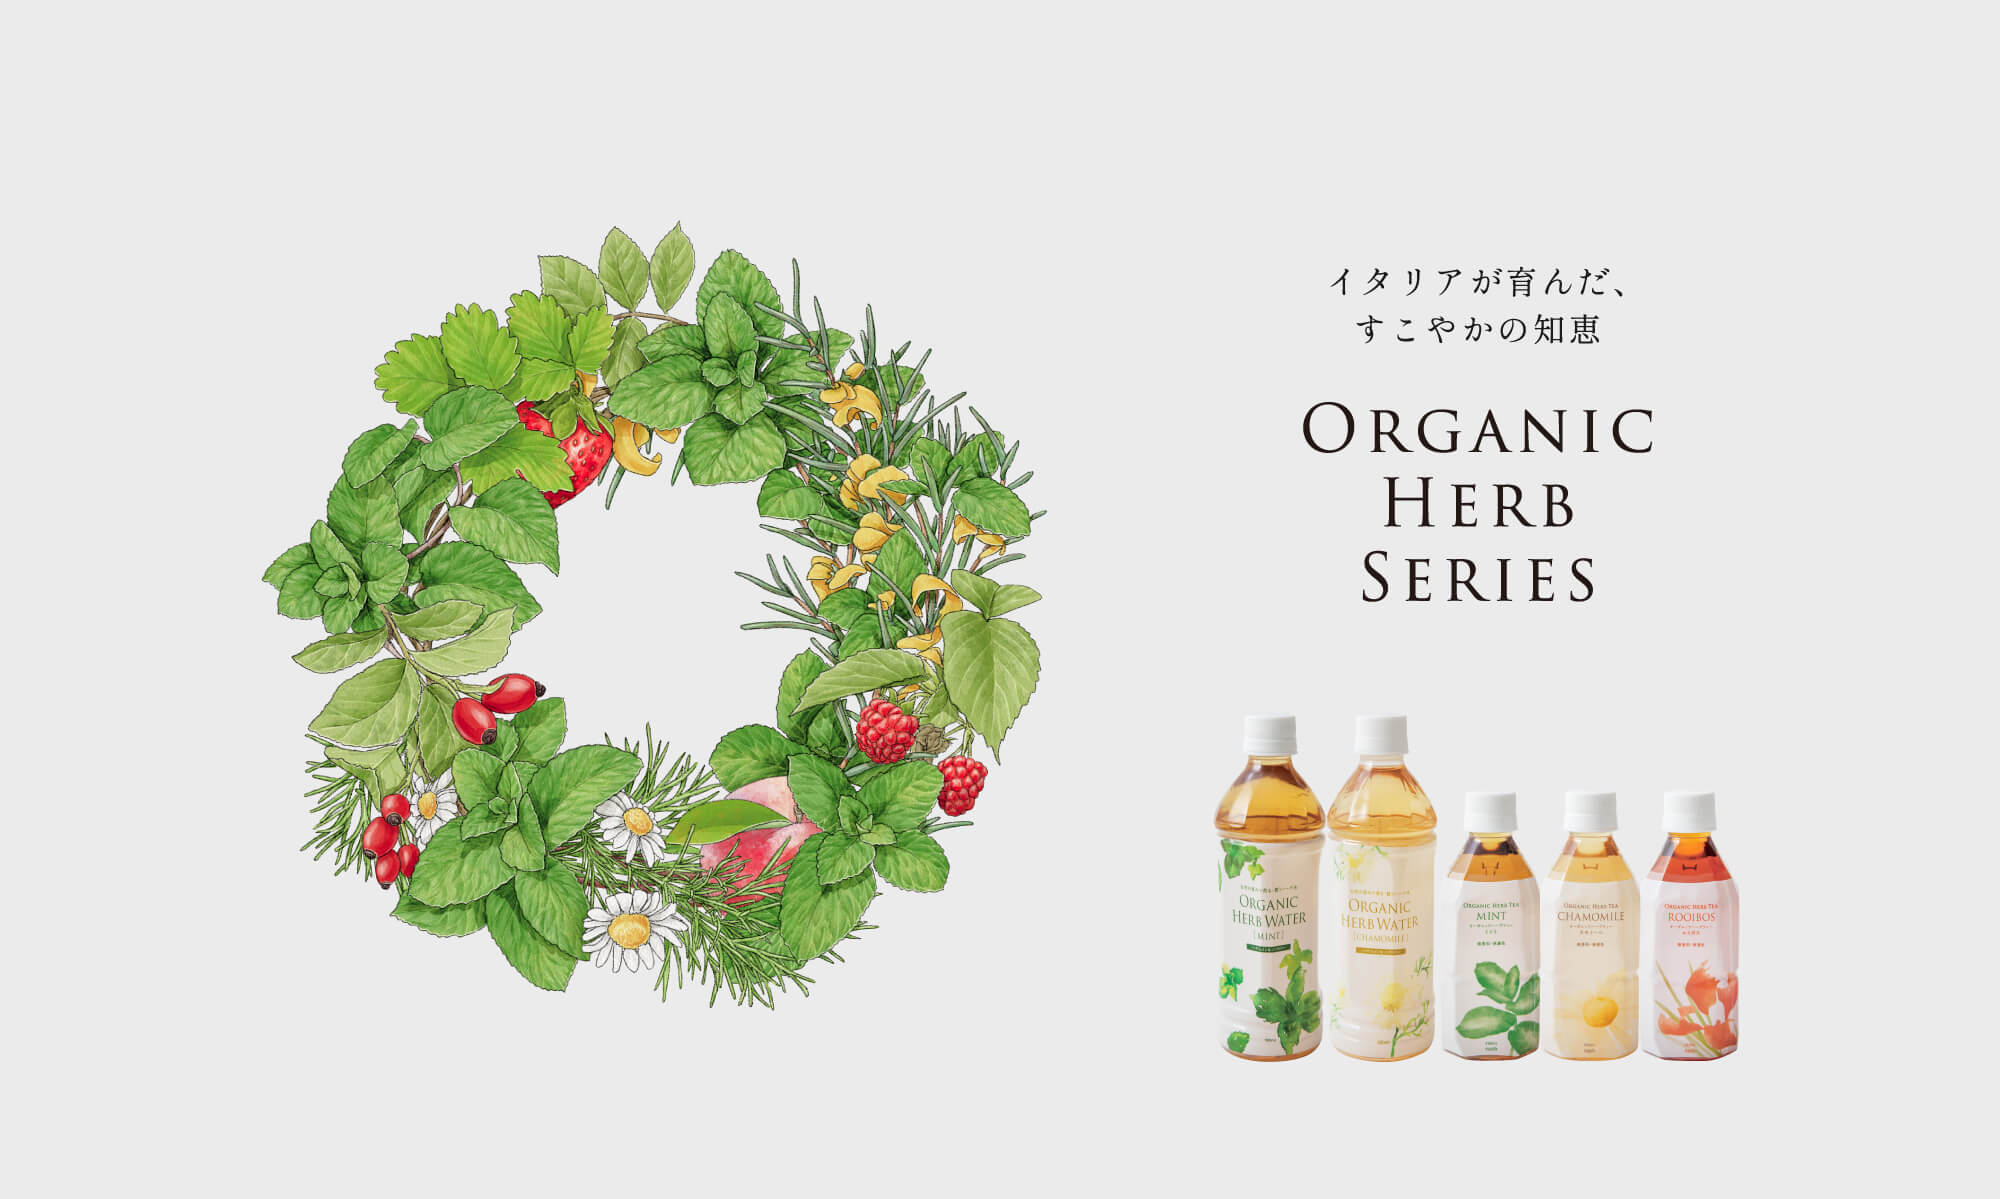 Organic Herb Series | 株式会社ビーエイチ | 理美容・エステサロン向けオリジナル商品の企画開発